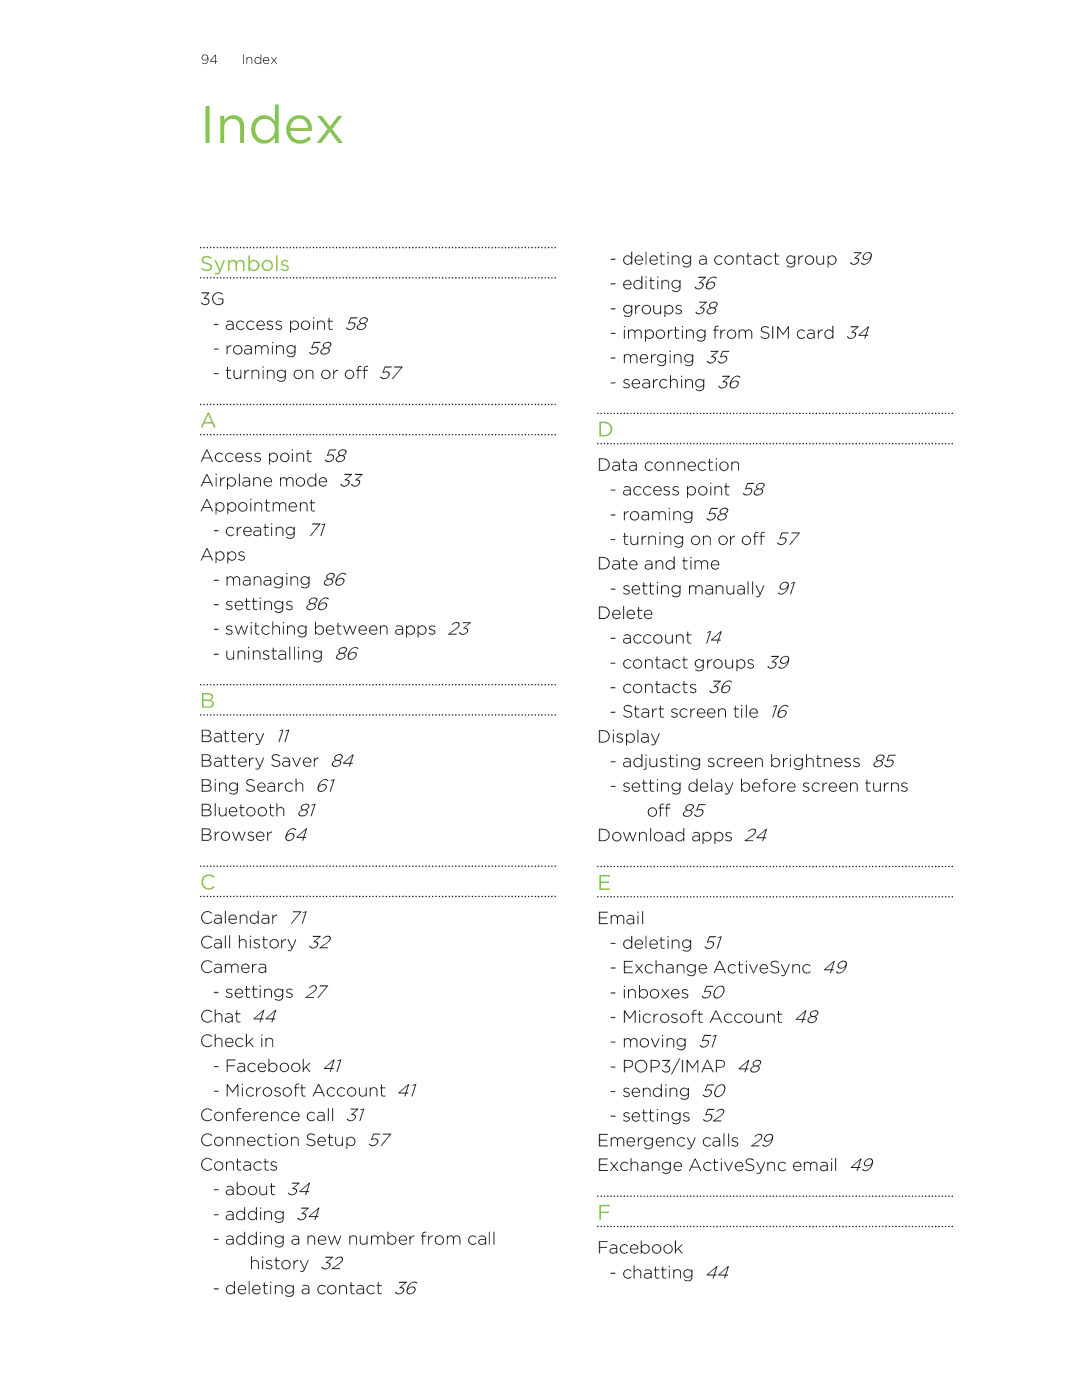 HTC 8X manual Index, Symbols 